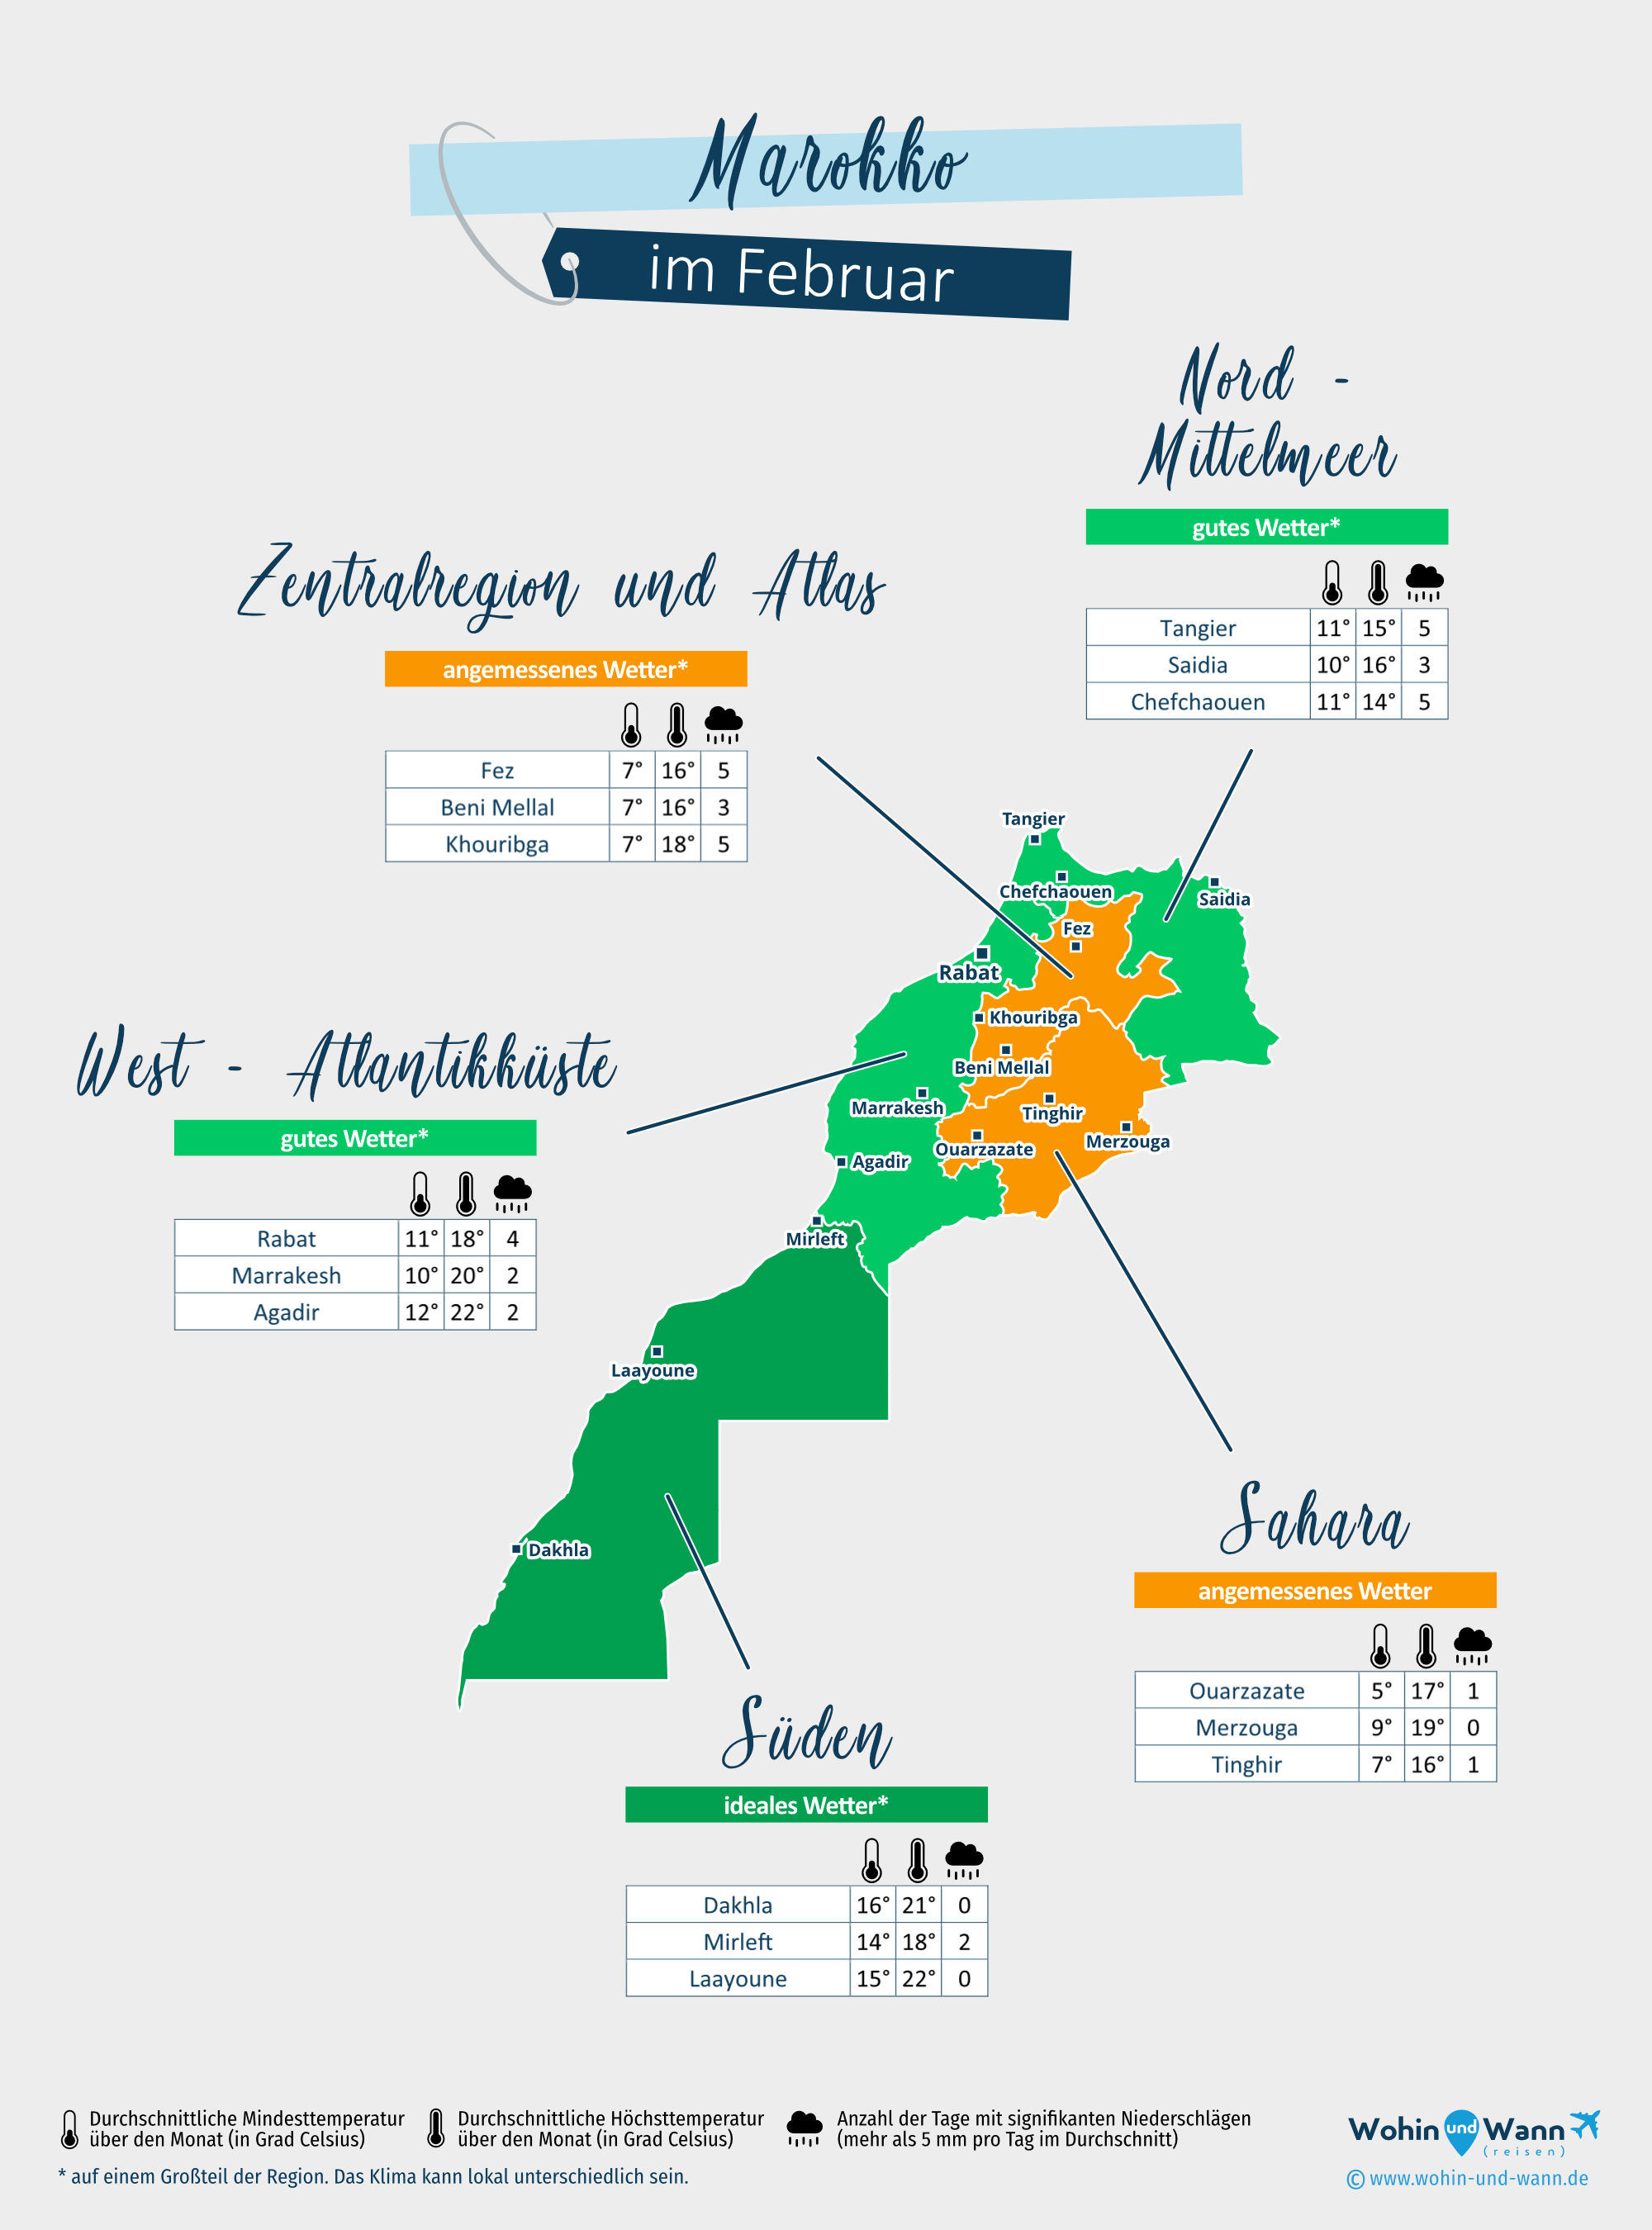 Marokko: Wetterkarte im Februar in verschiedenen Regionen